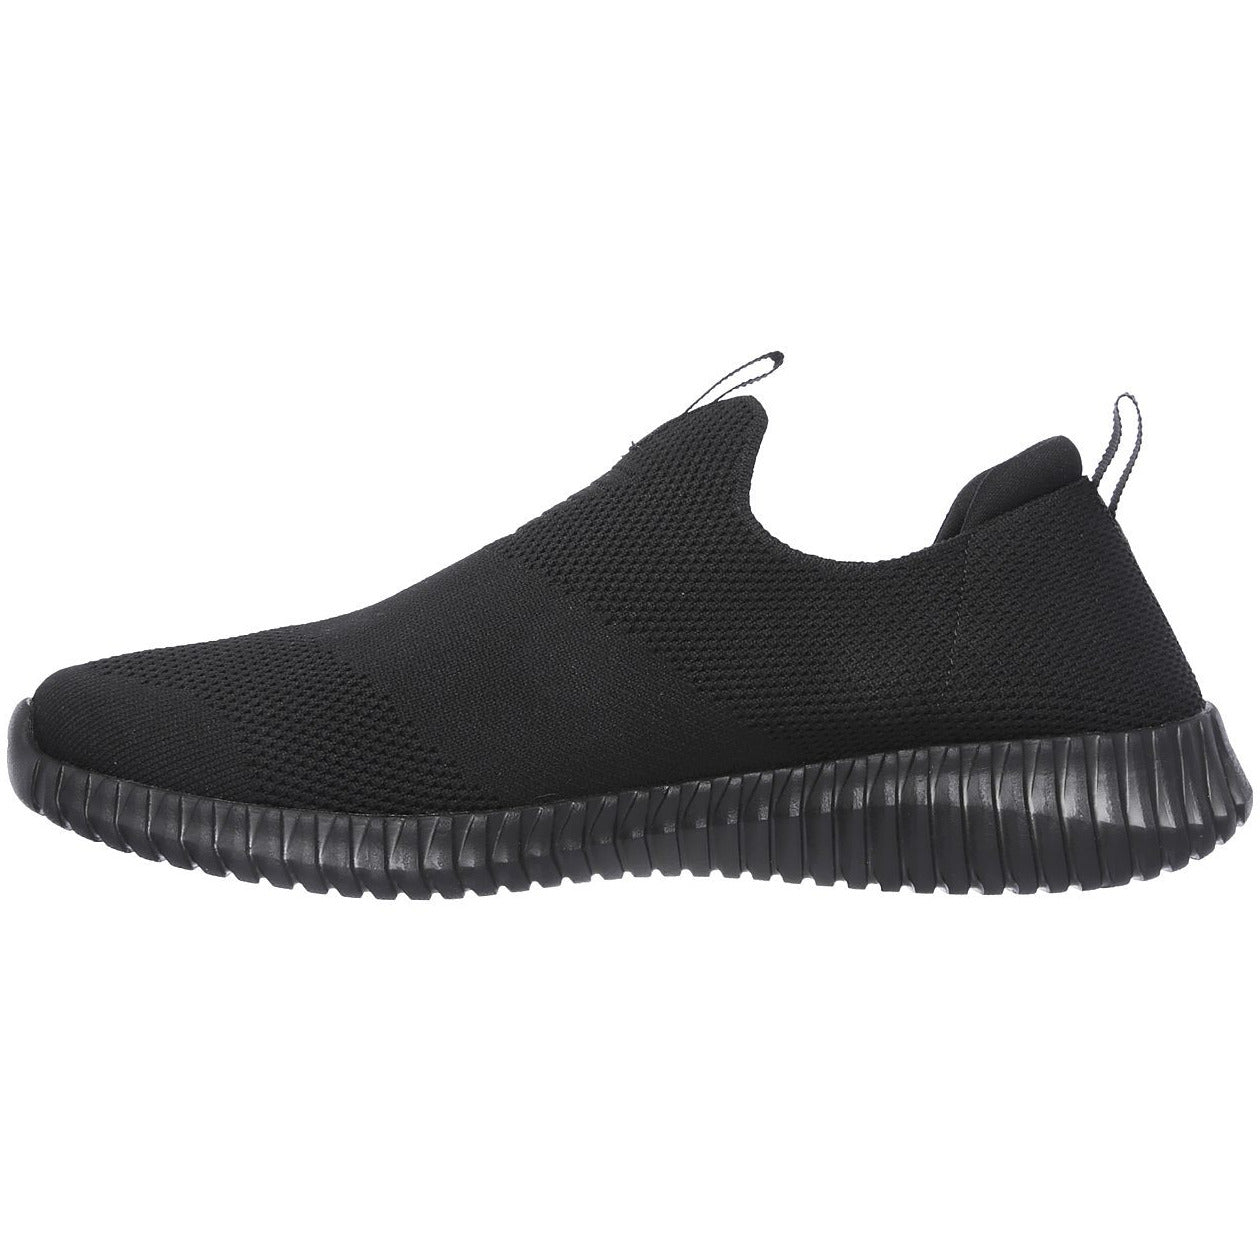 SKECHERS ELITE FLEX - WASIK BLACK - getset-footwear.myshopify.com